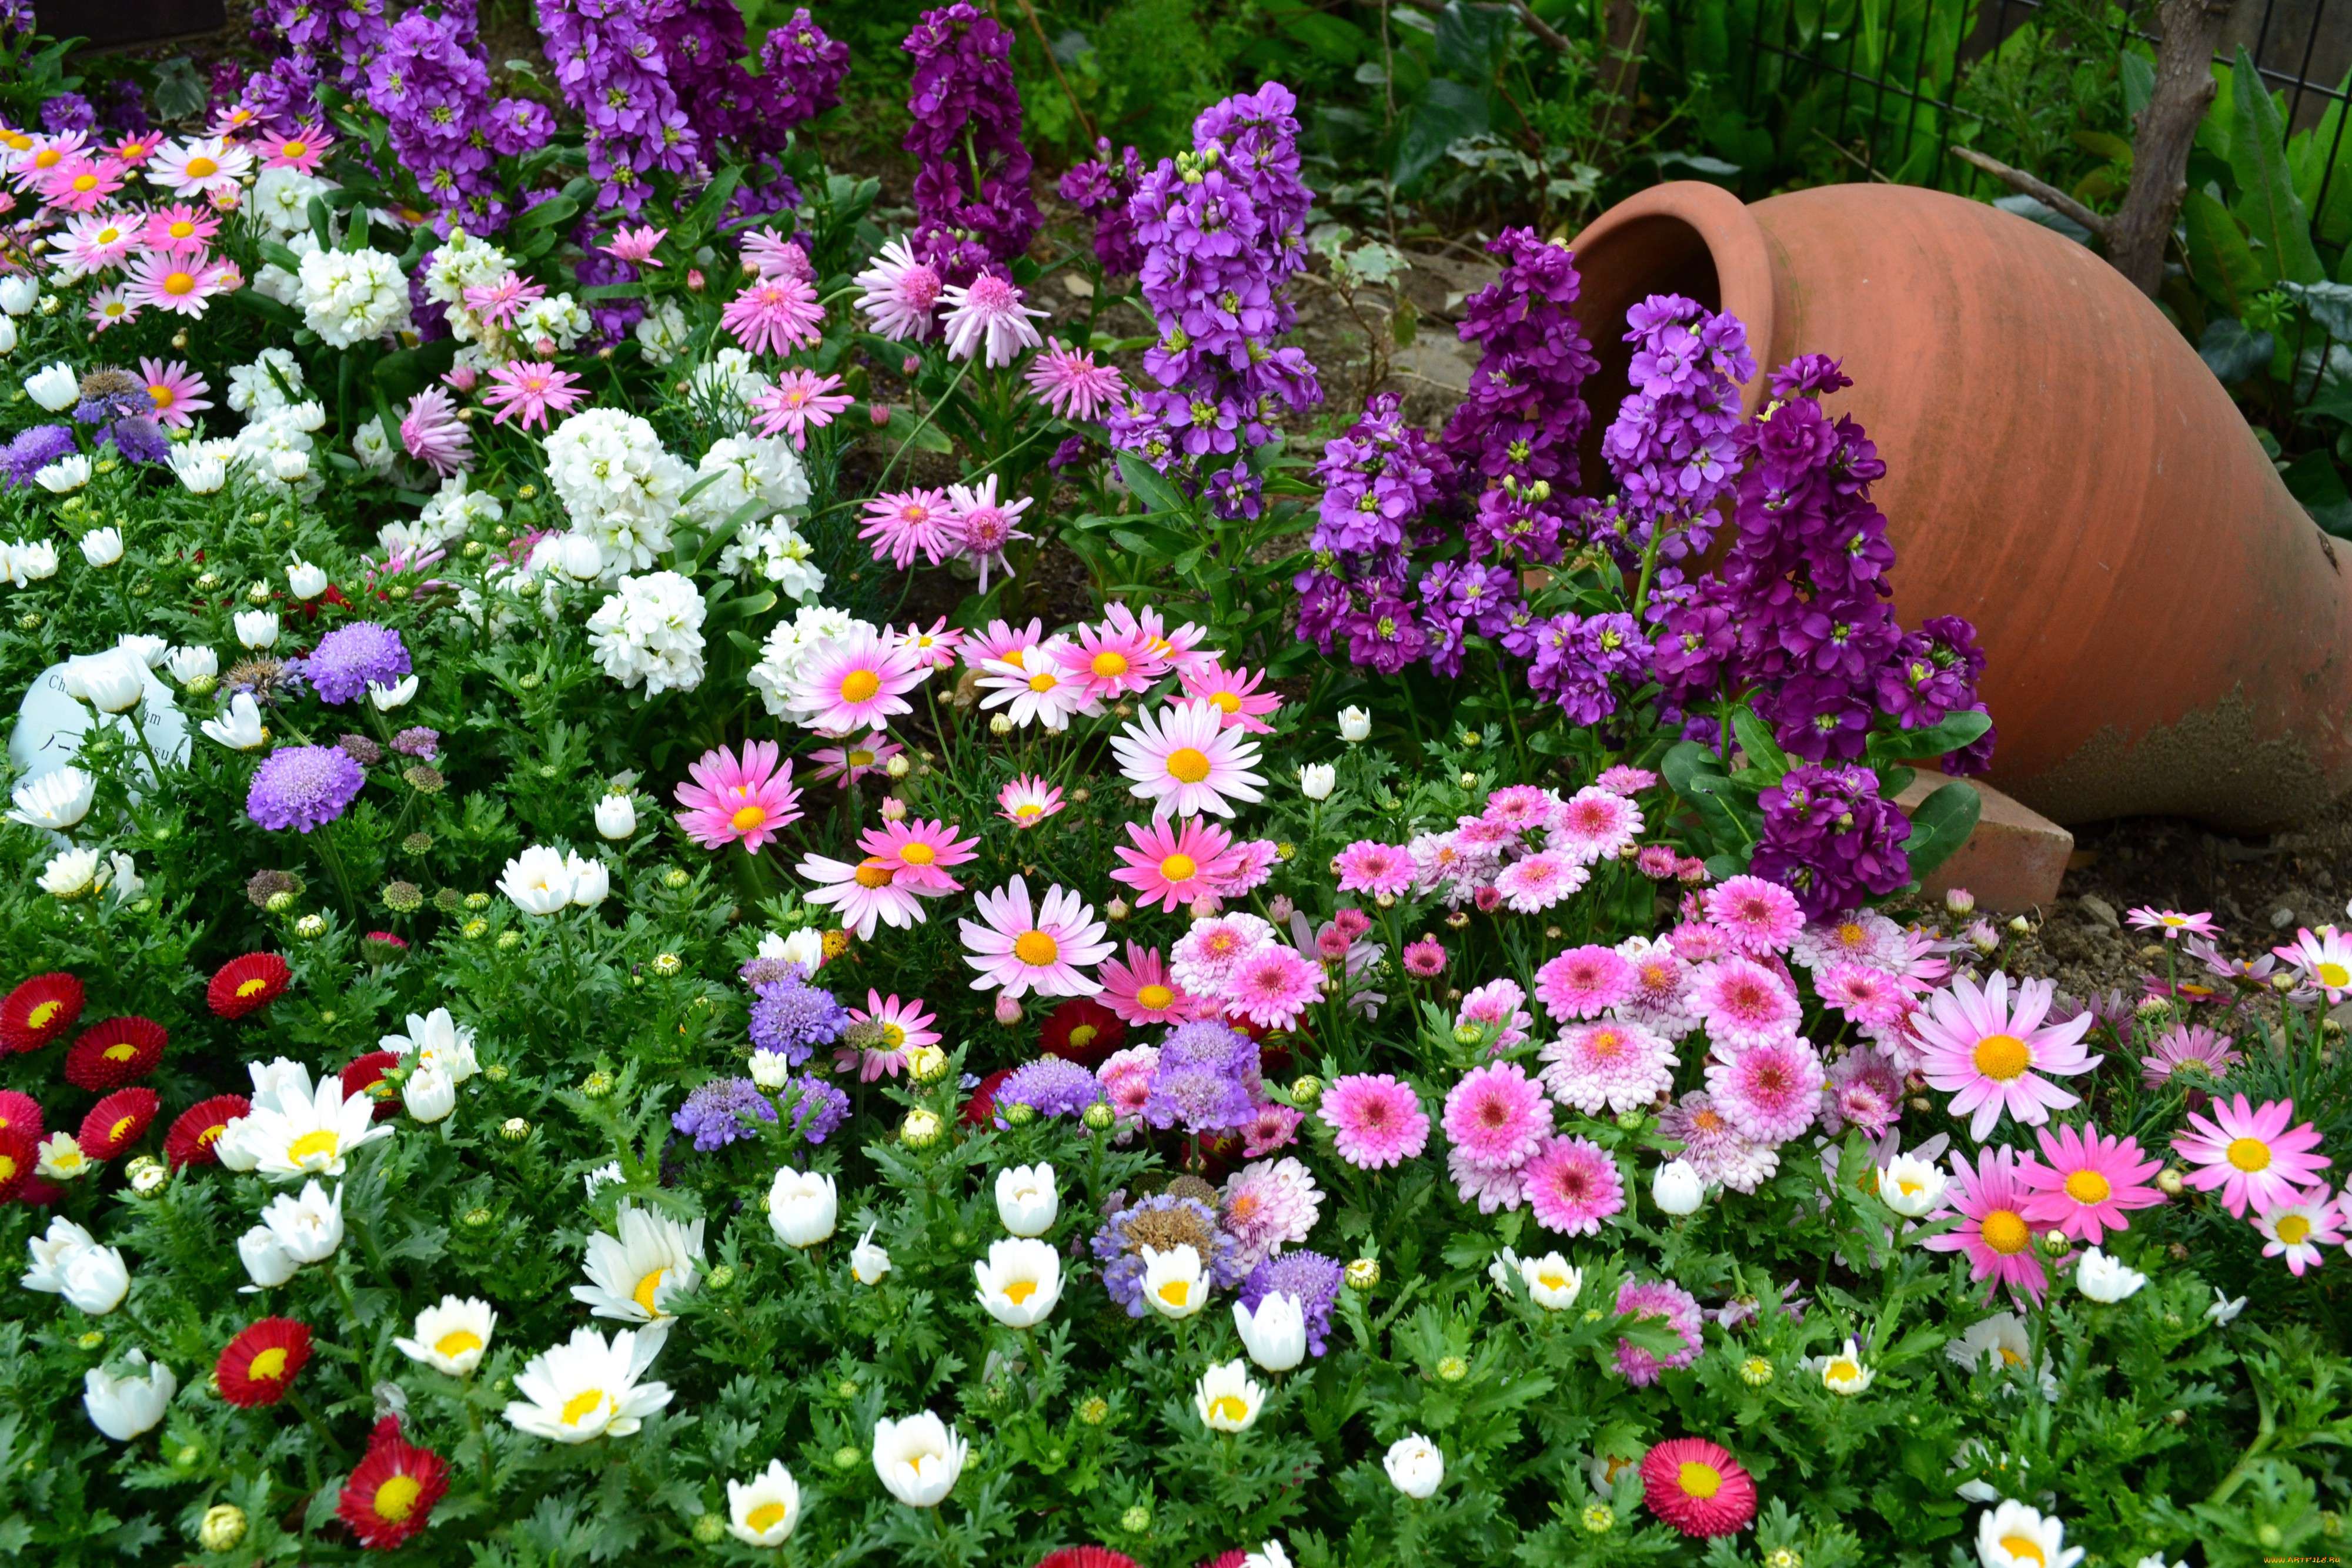 Image result for ‫گلهای رنگارنگ‬‎